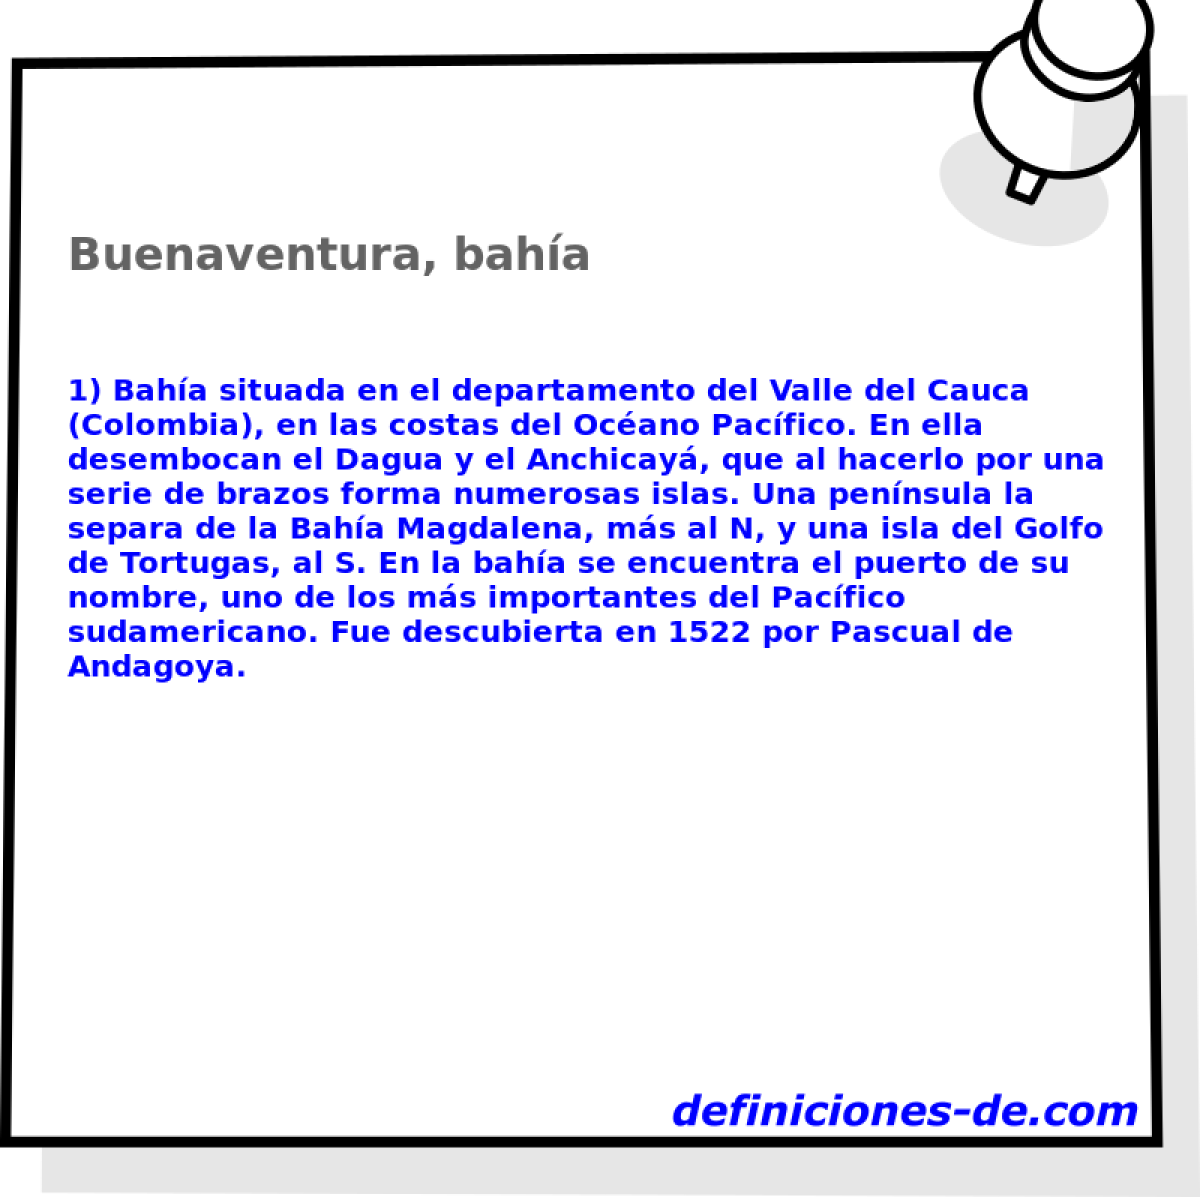 Buenaventura, baha 